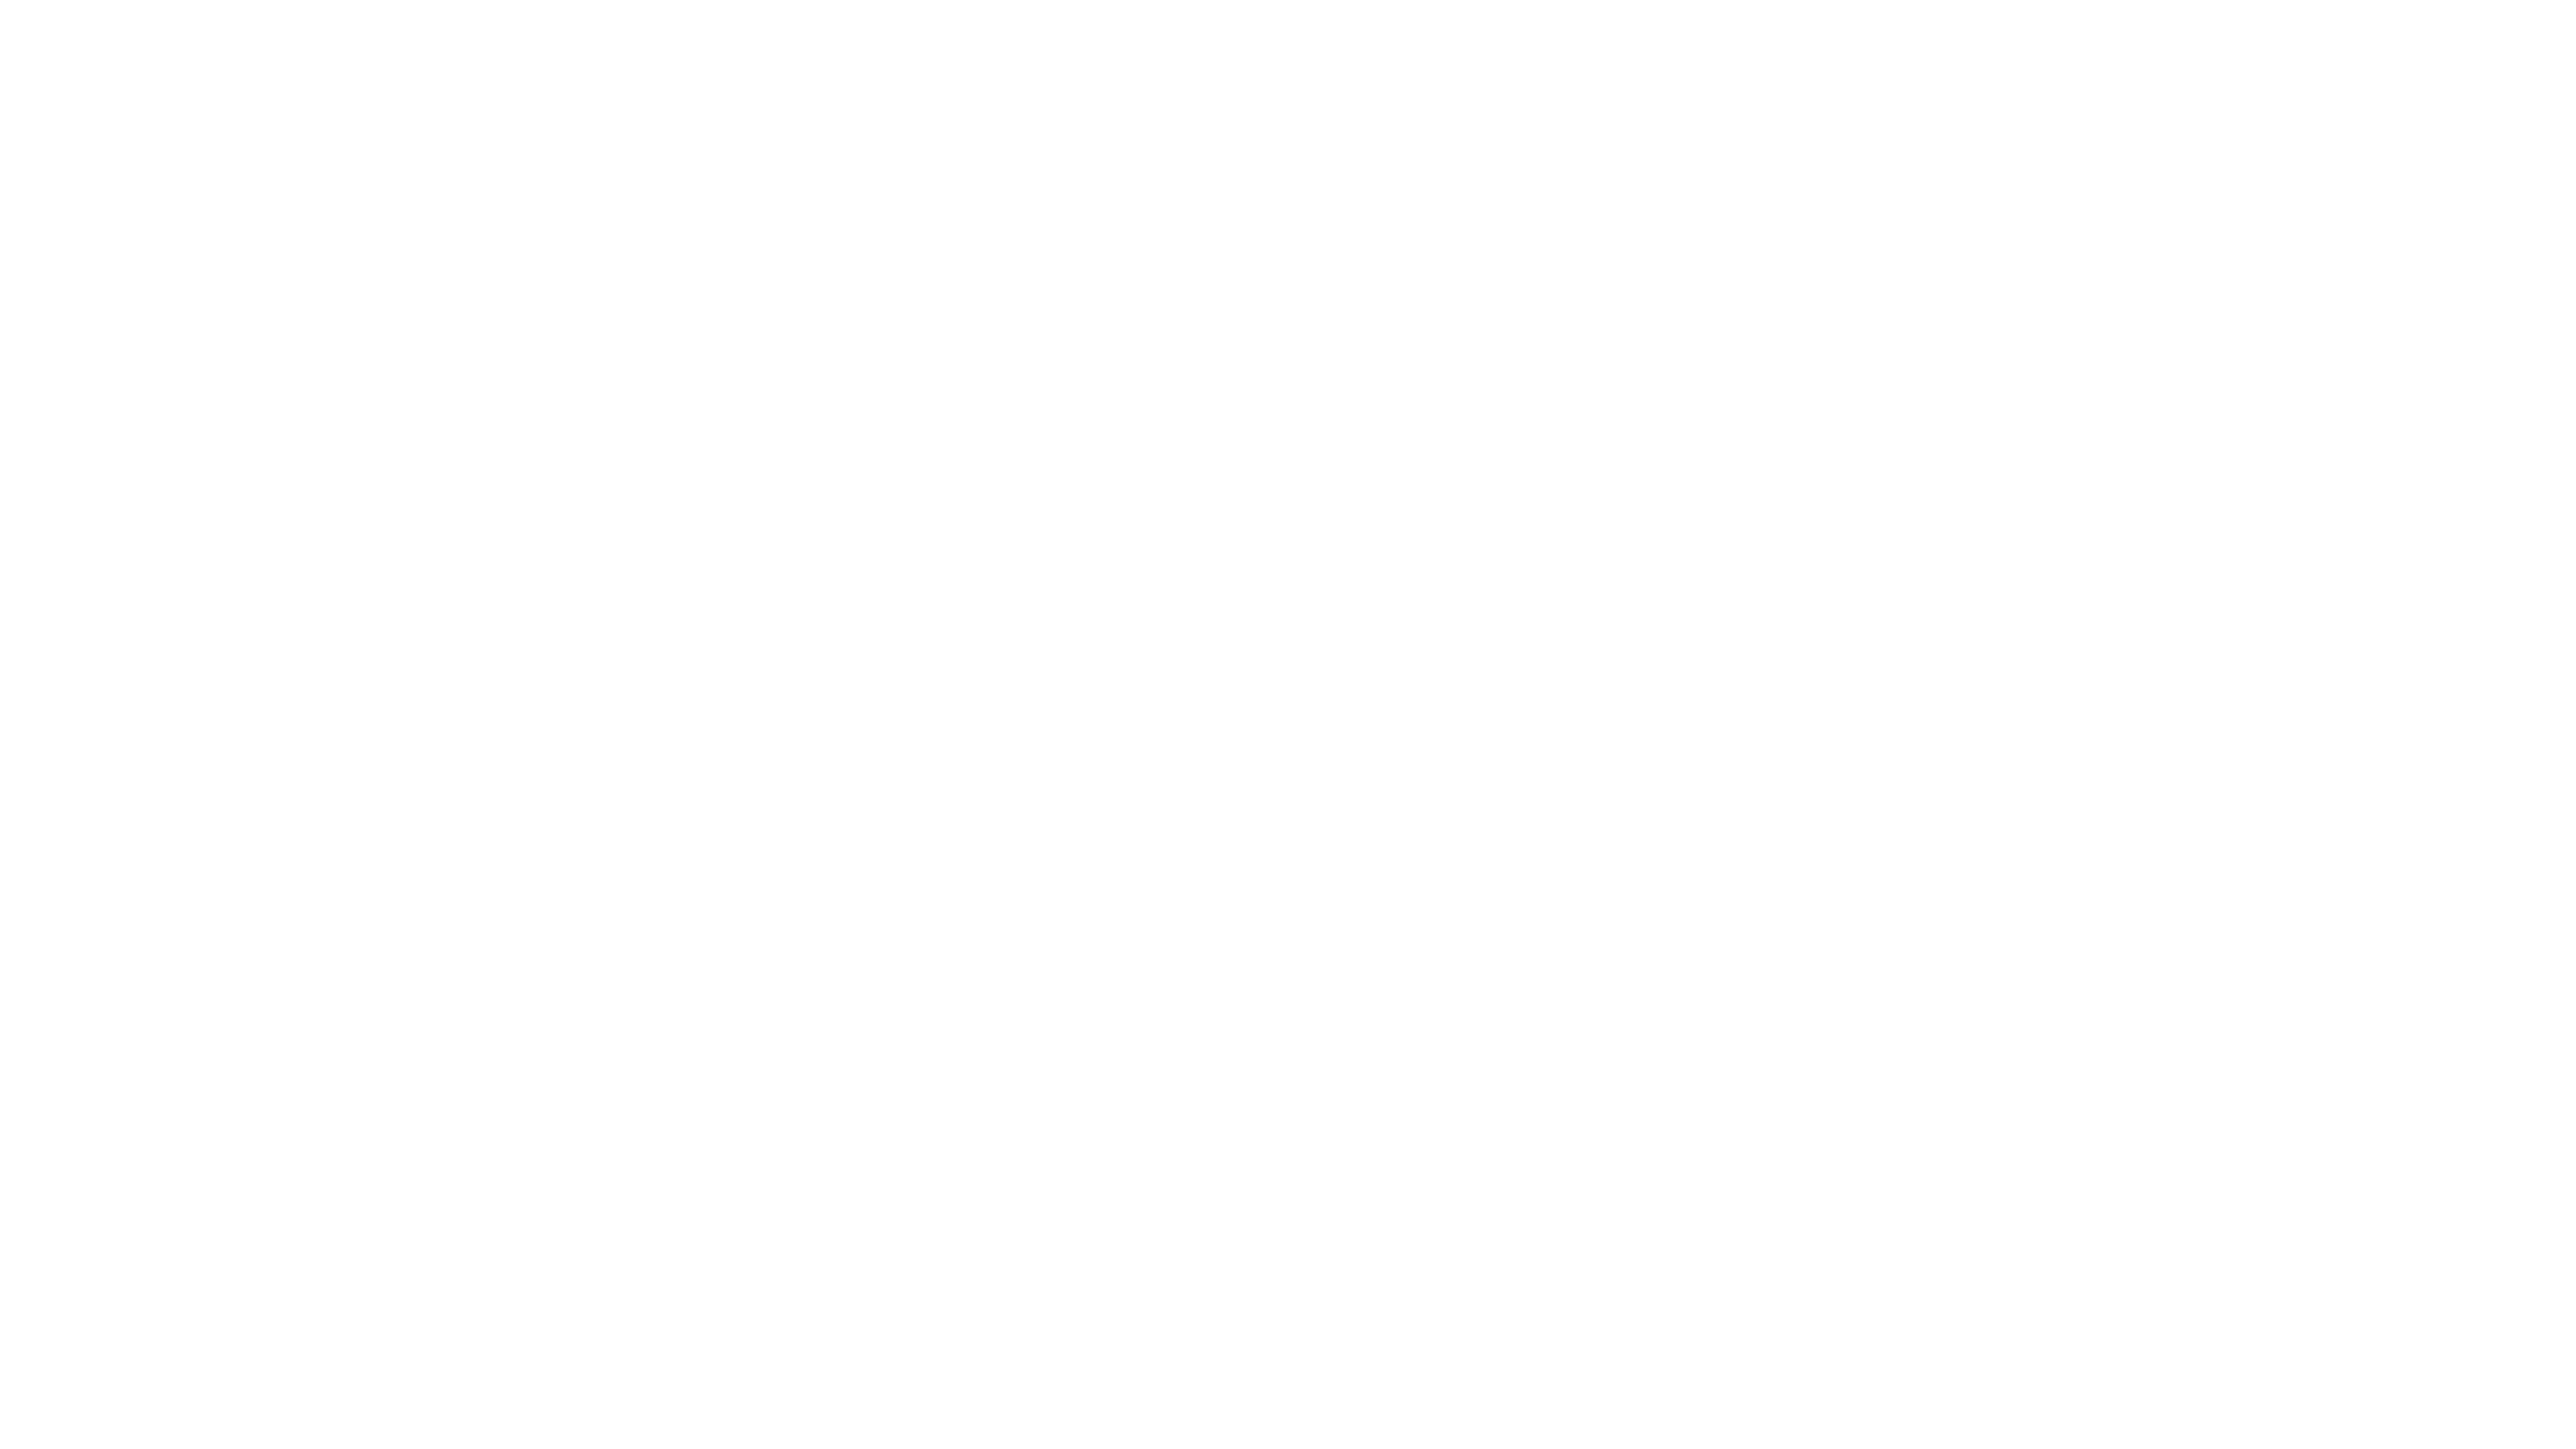 Killer nanny: colpevole o innocente?